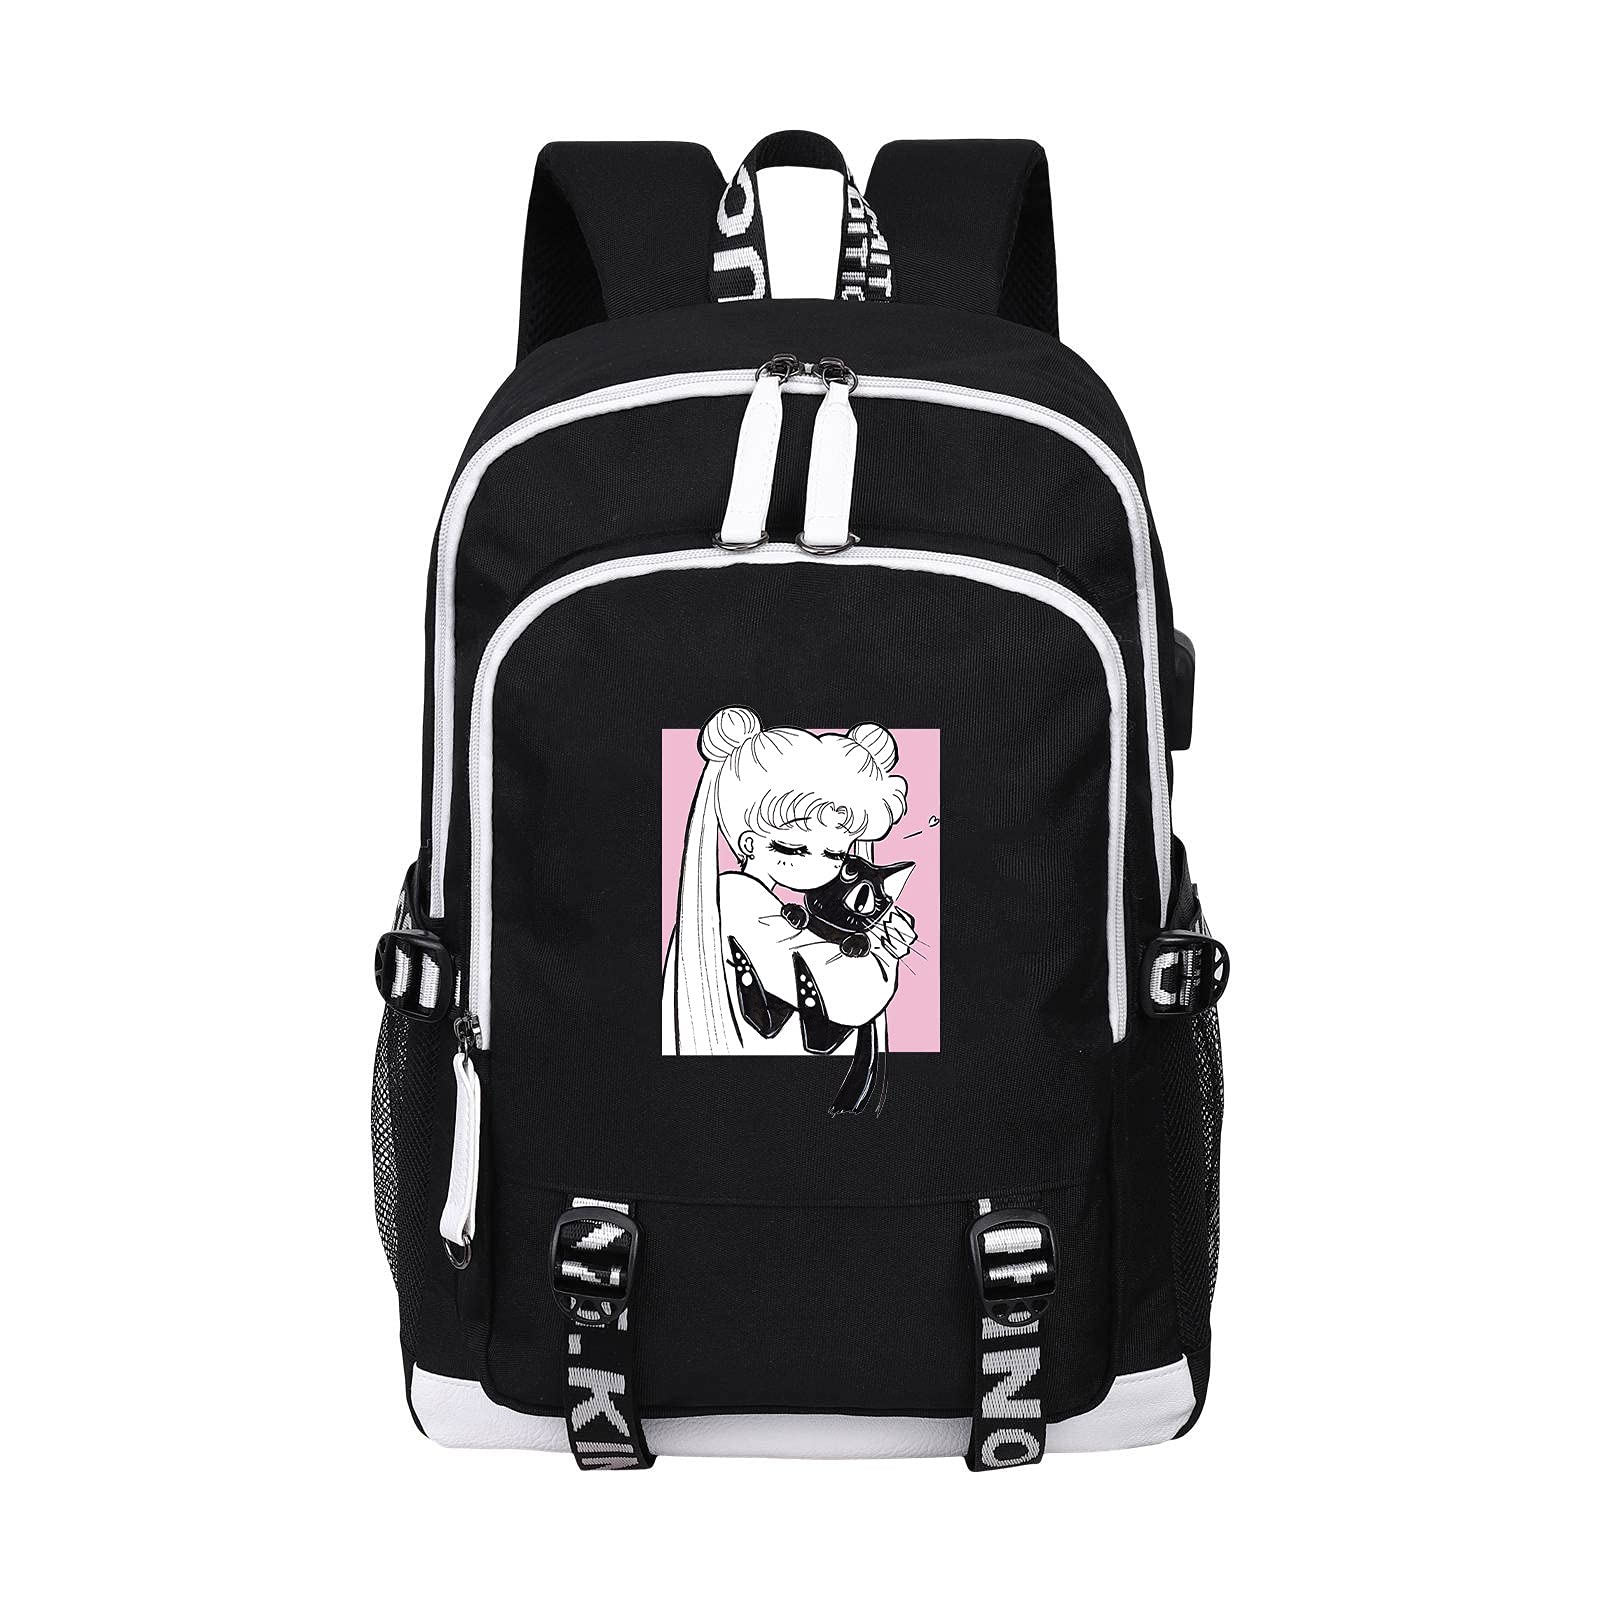 CREPUSCOLO Sailor Moon Backpack Anime School Bag Laptop Daypack with USB Charging Port Luna Bookbag( Black)